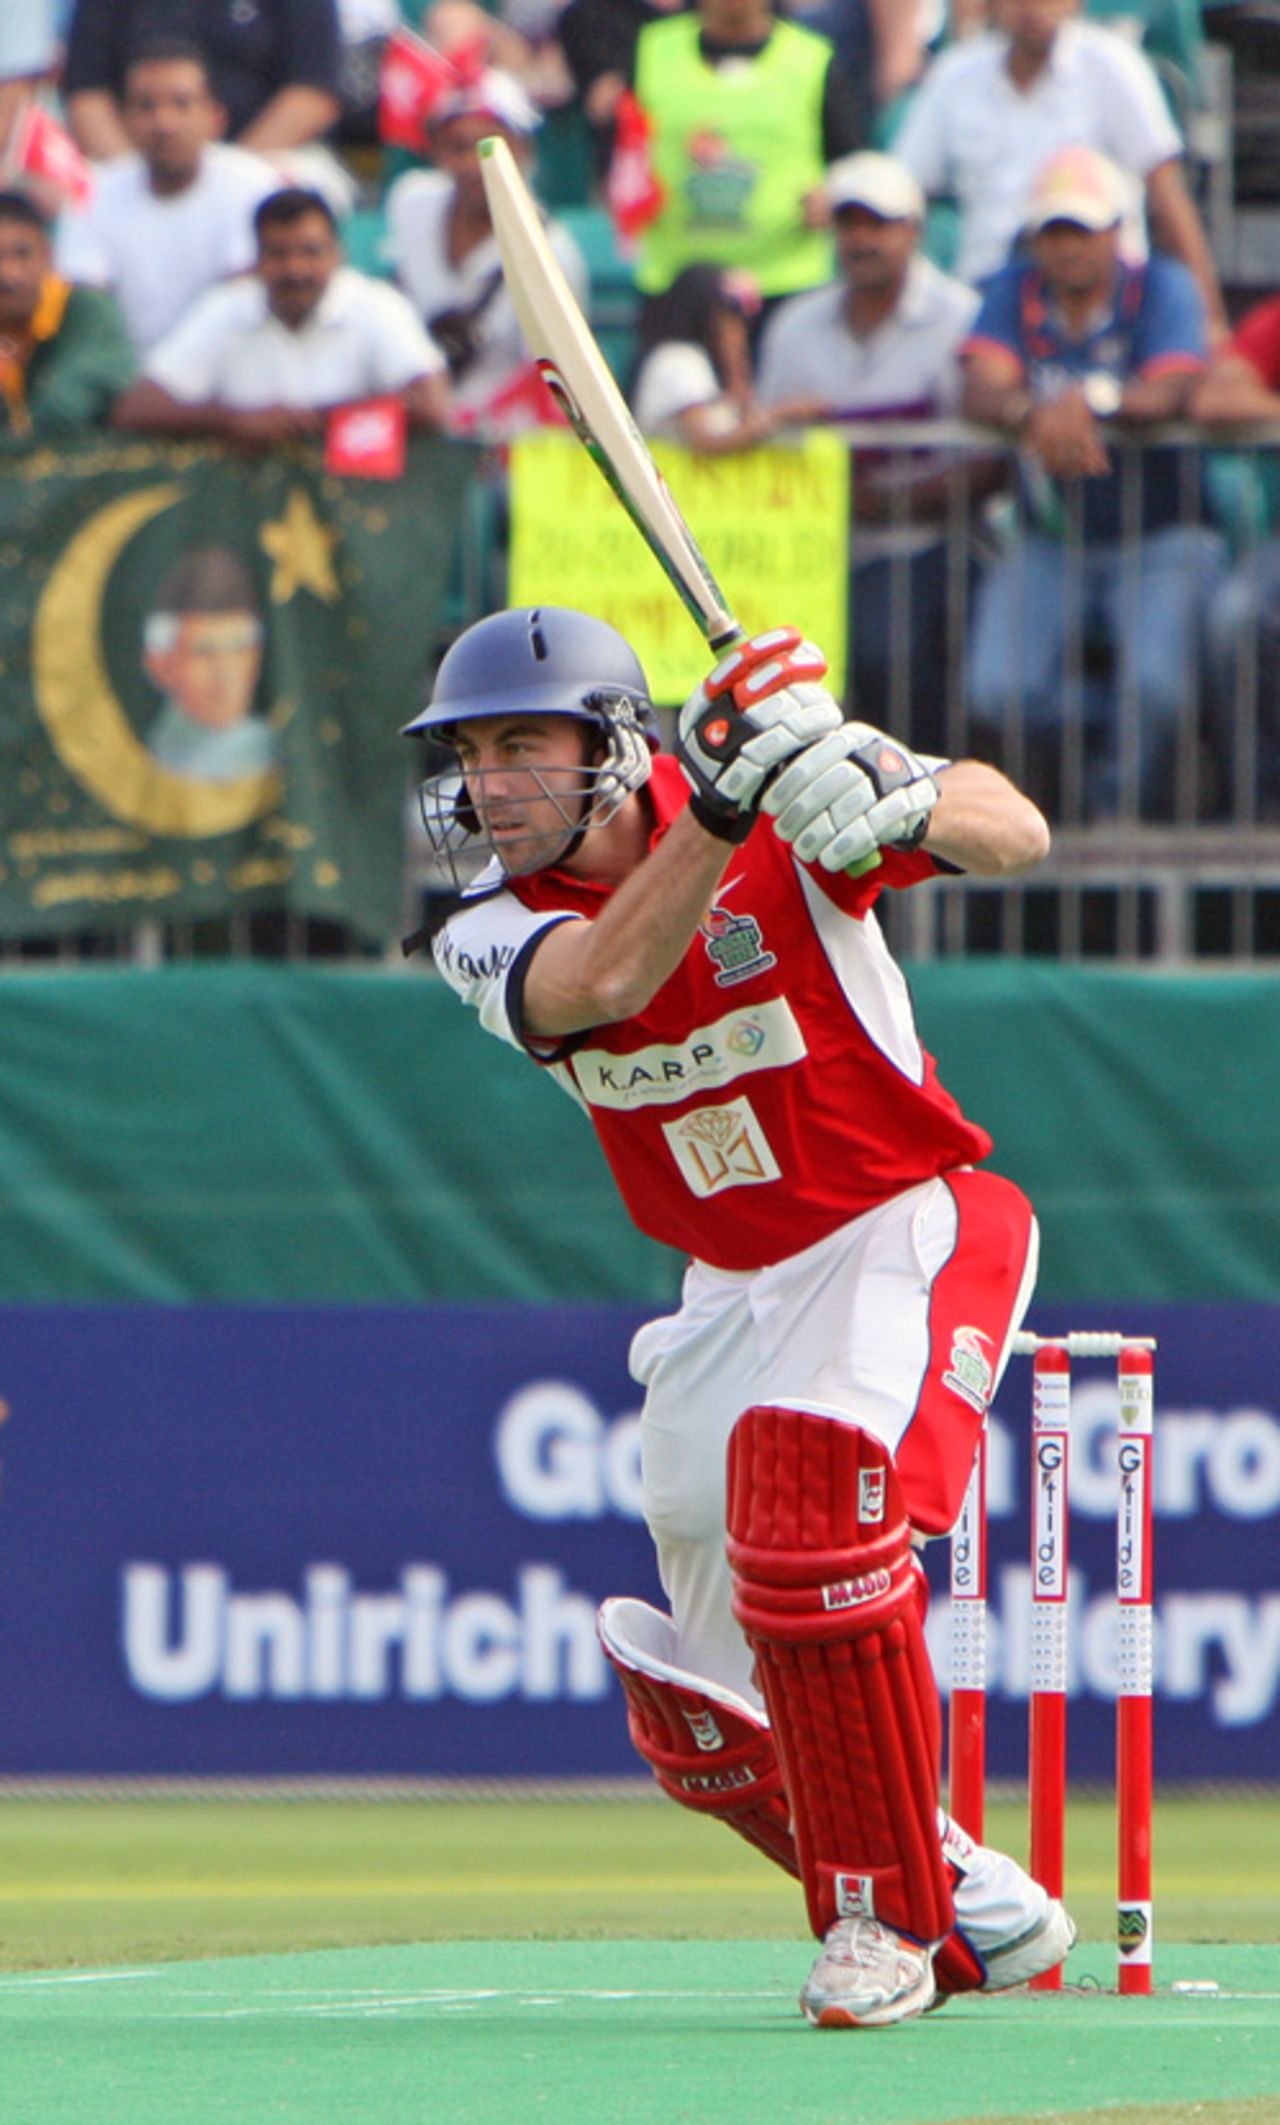 Mark Wright in action at the 2009 Hong Kong Cricket Sixes